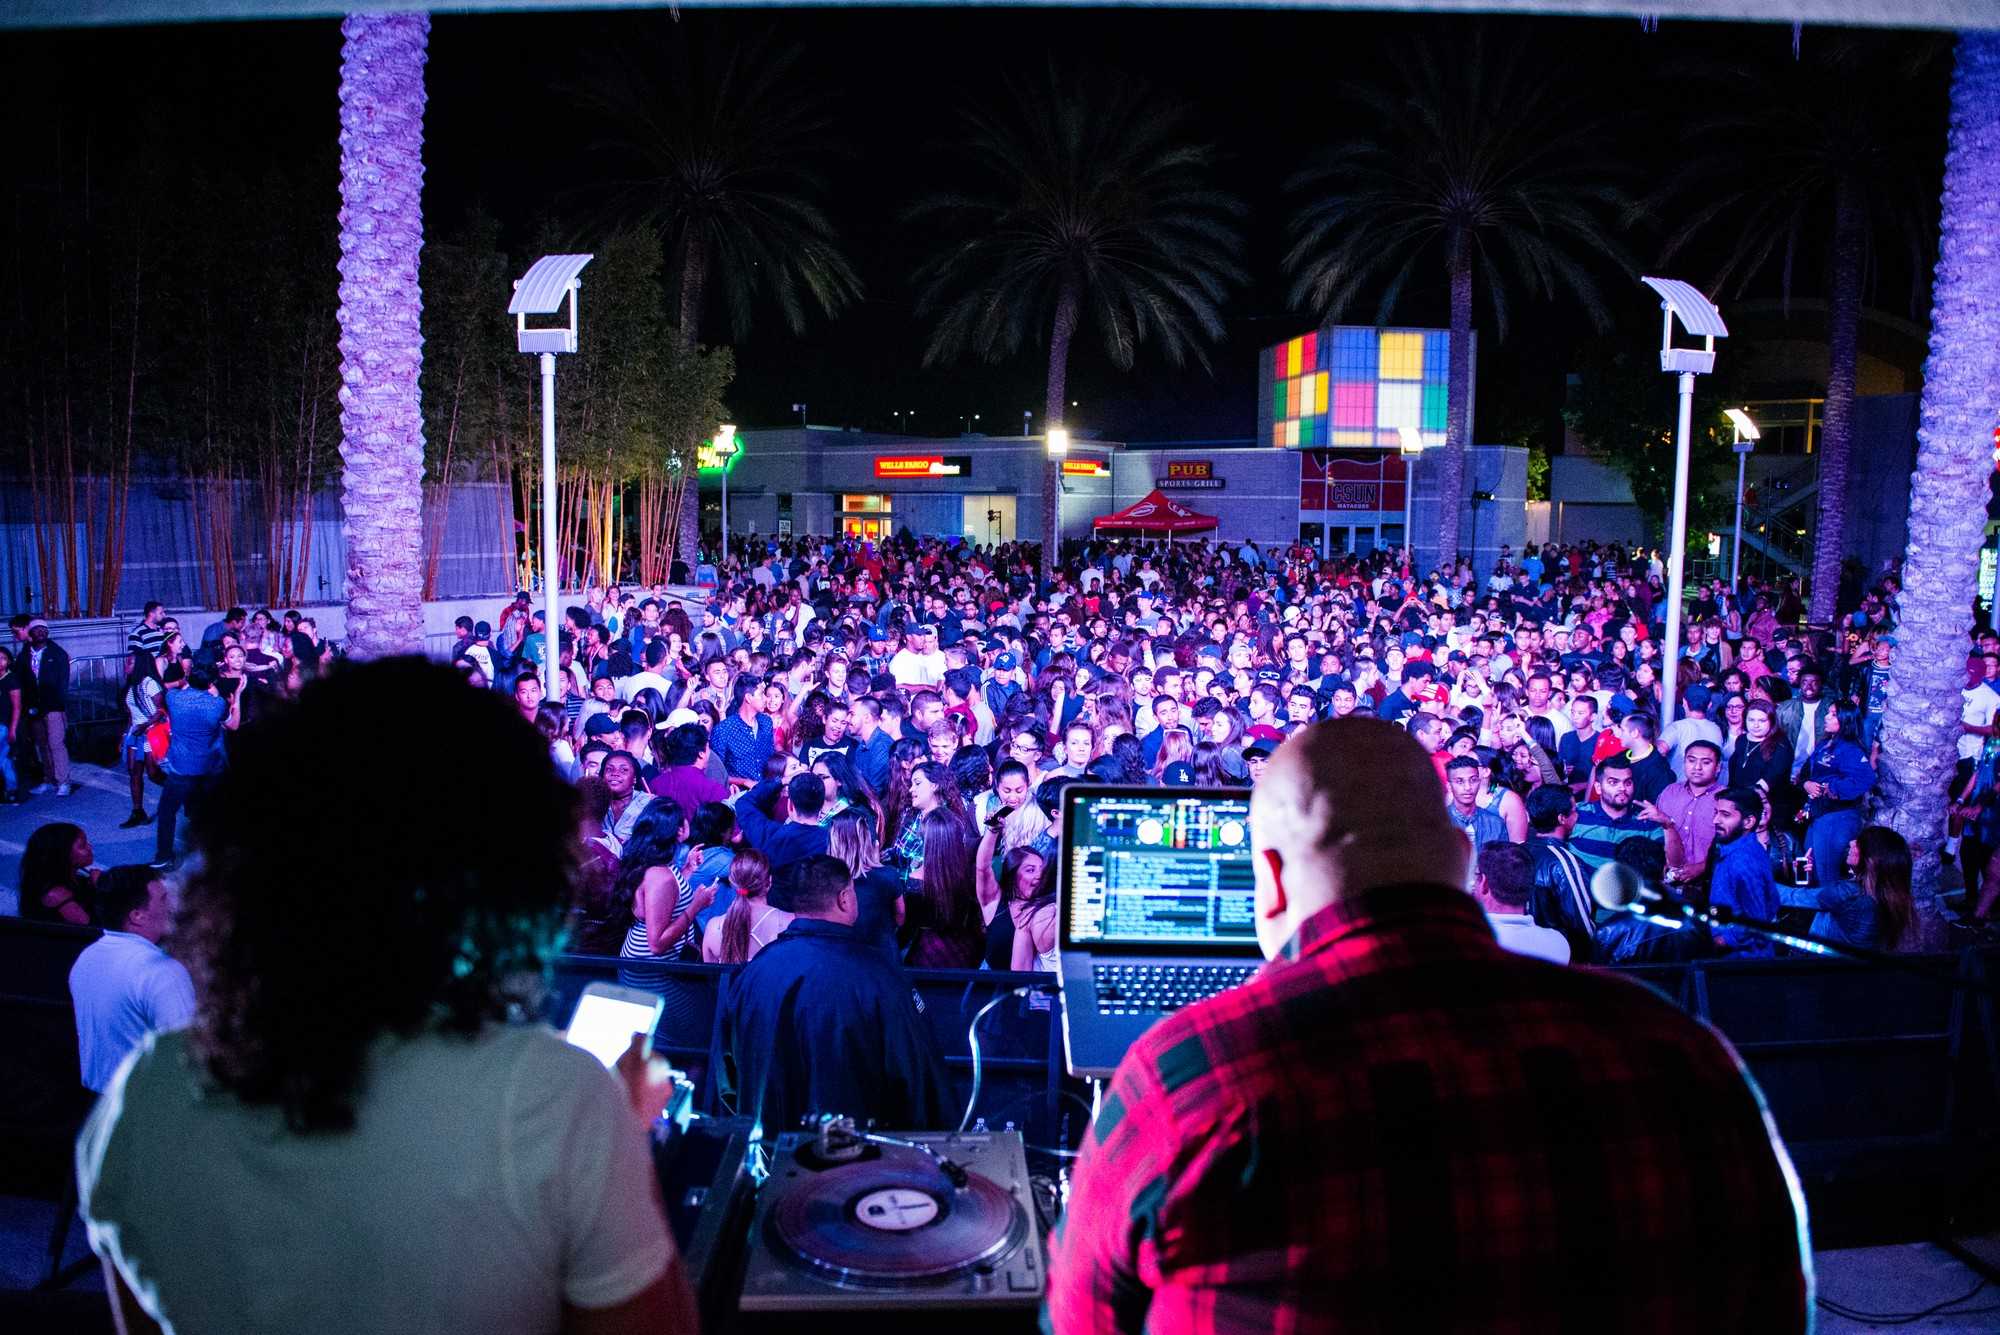 DJs perform for large crowd